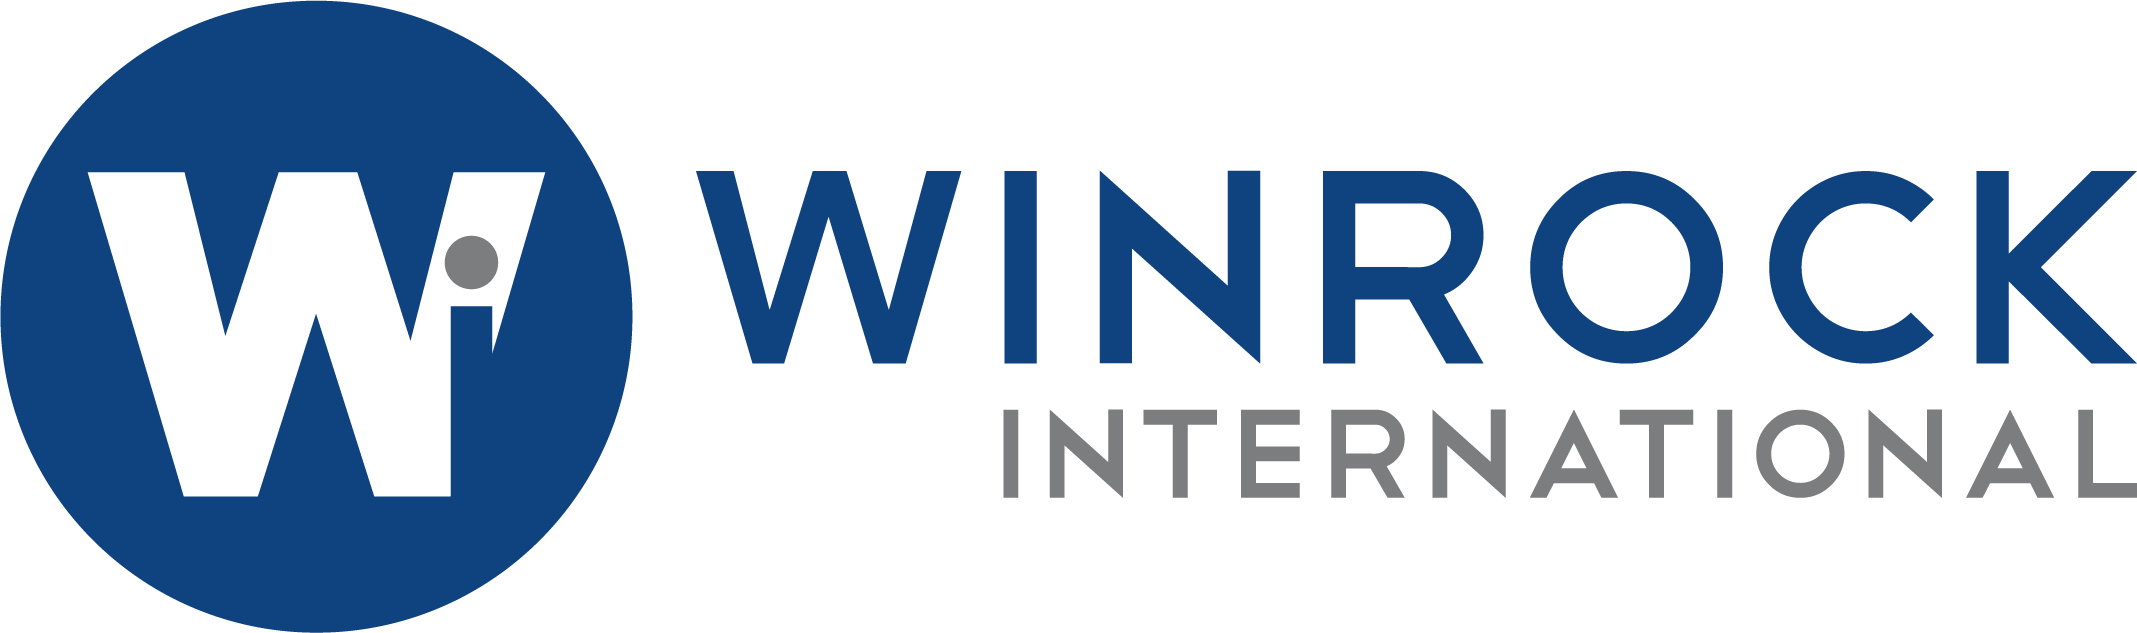 Winrock-logo.png